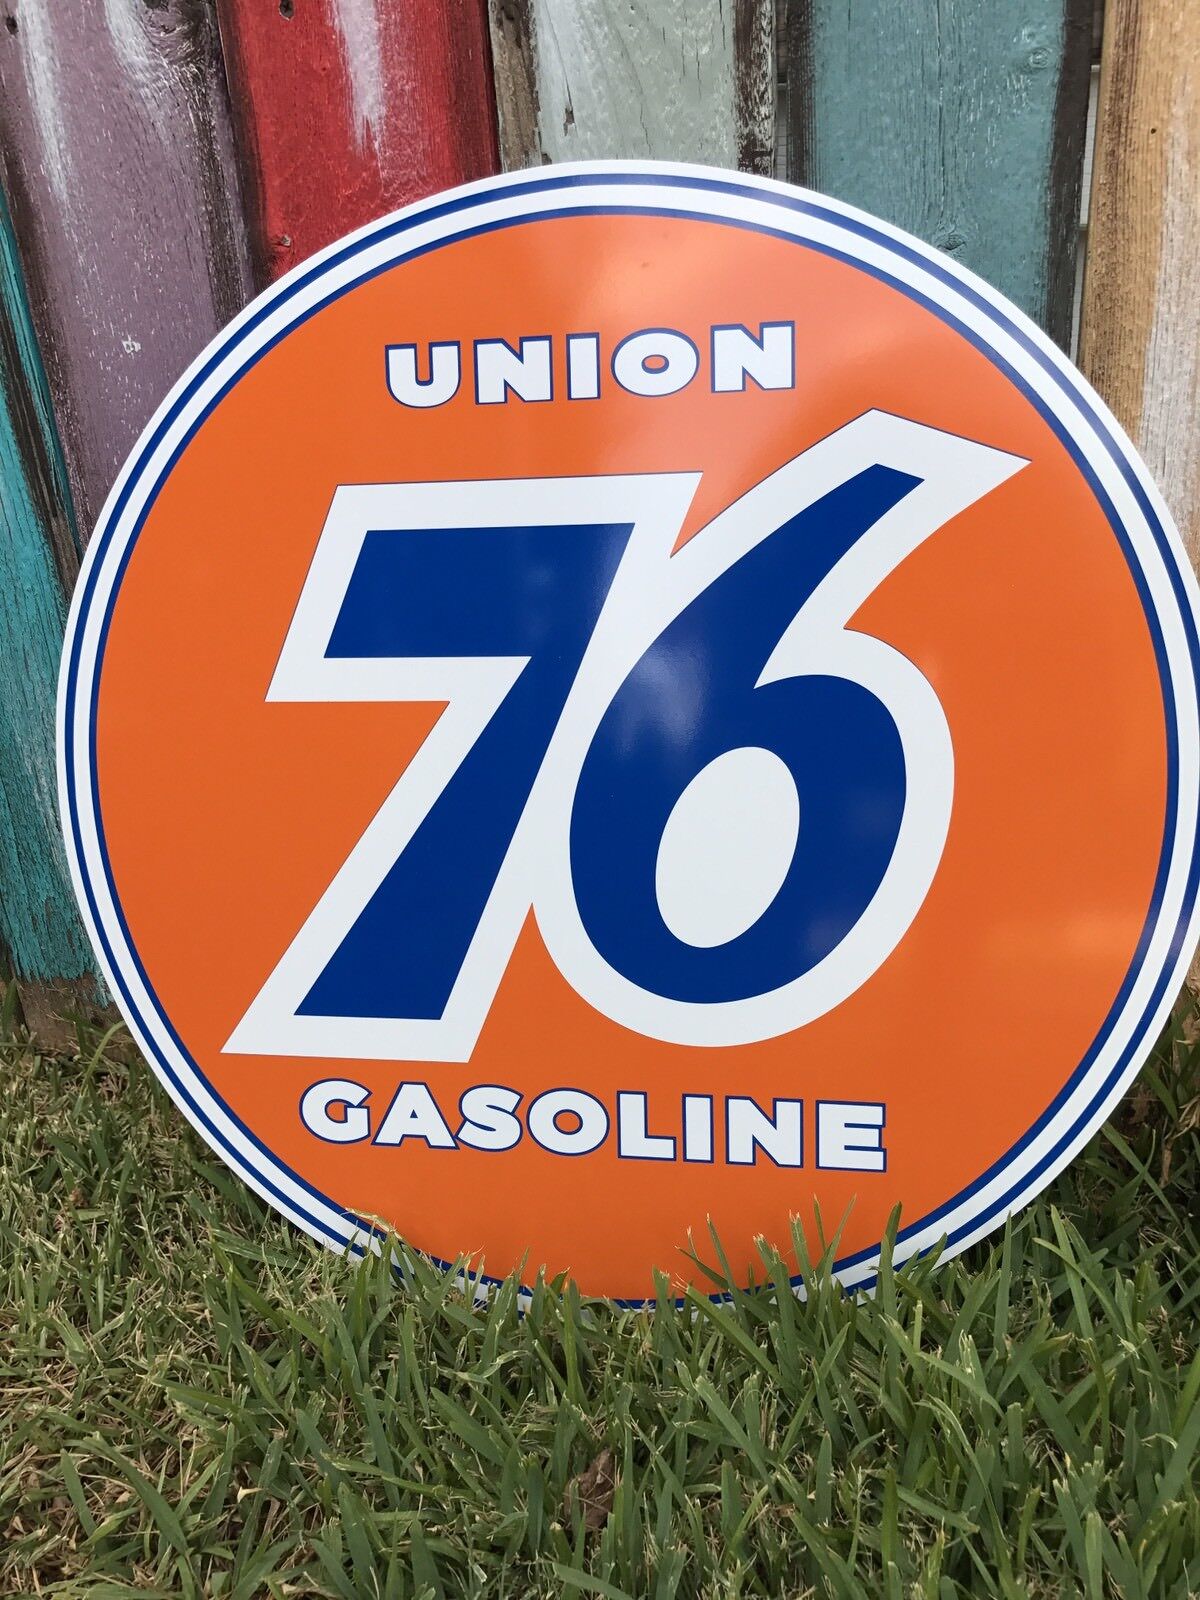 Antique Vintage Old Style Union 76 Gasoline Sign